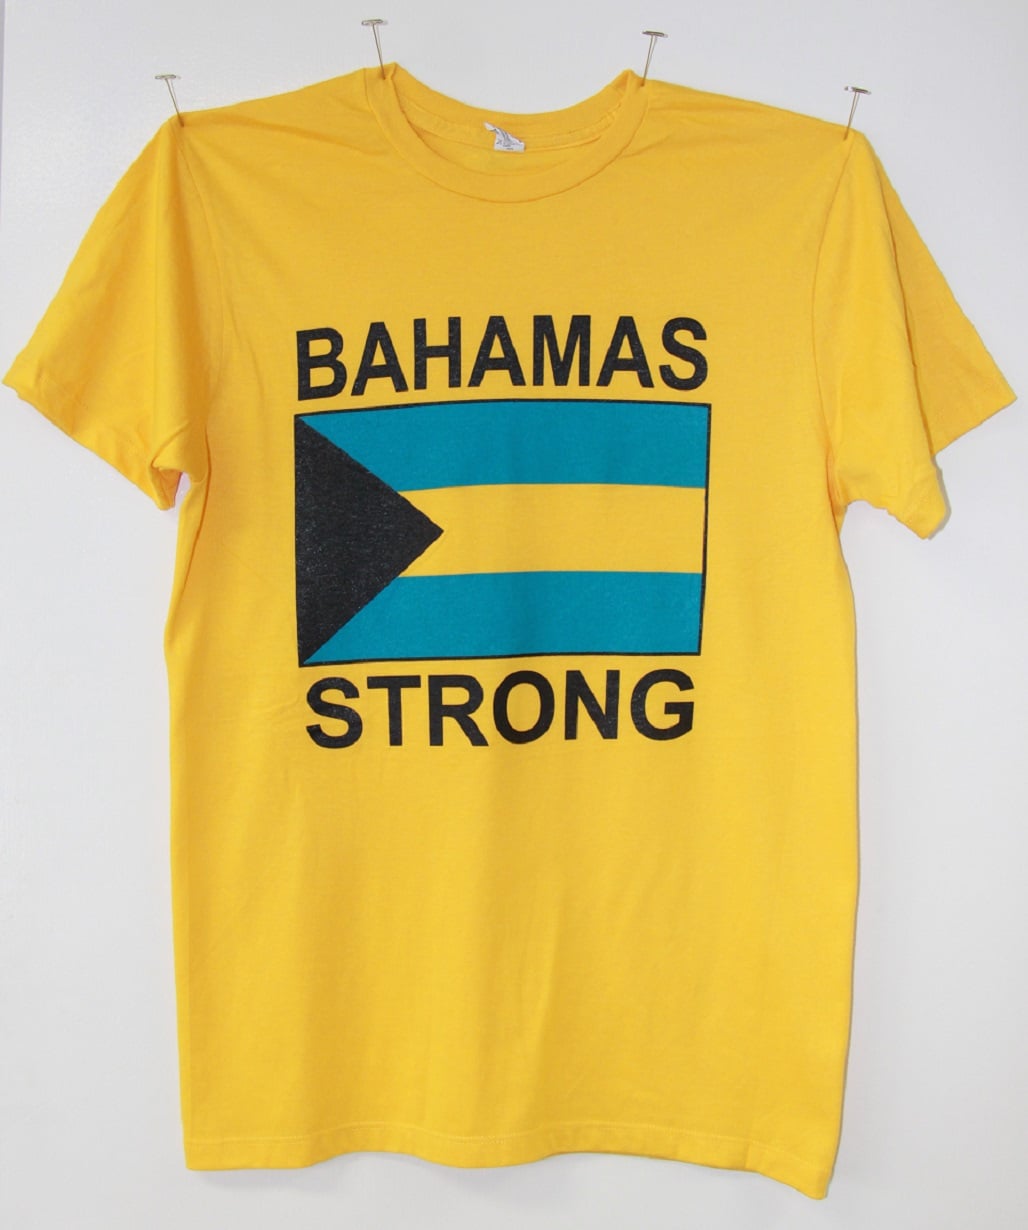 What to Buy in Nassau Bahamas?